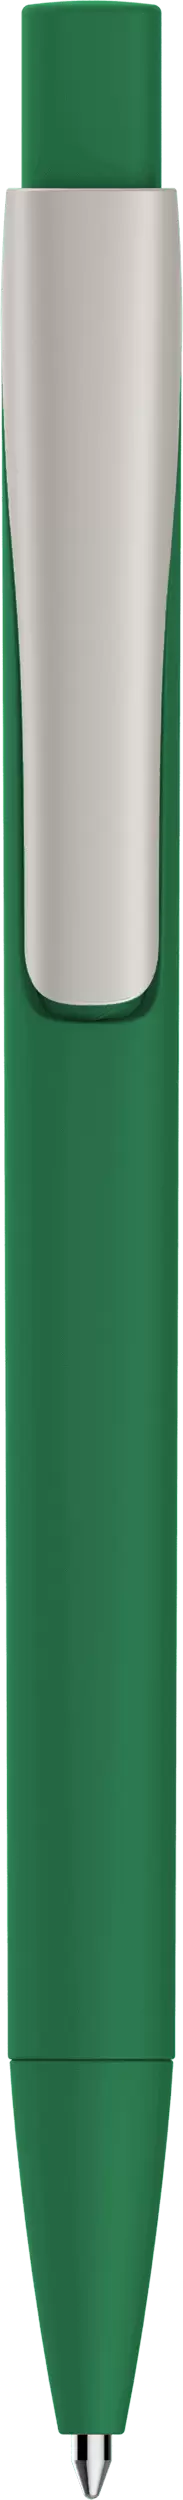 Ручка MASTER SOFT Зеленая 1040-02